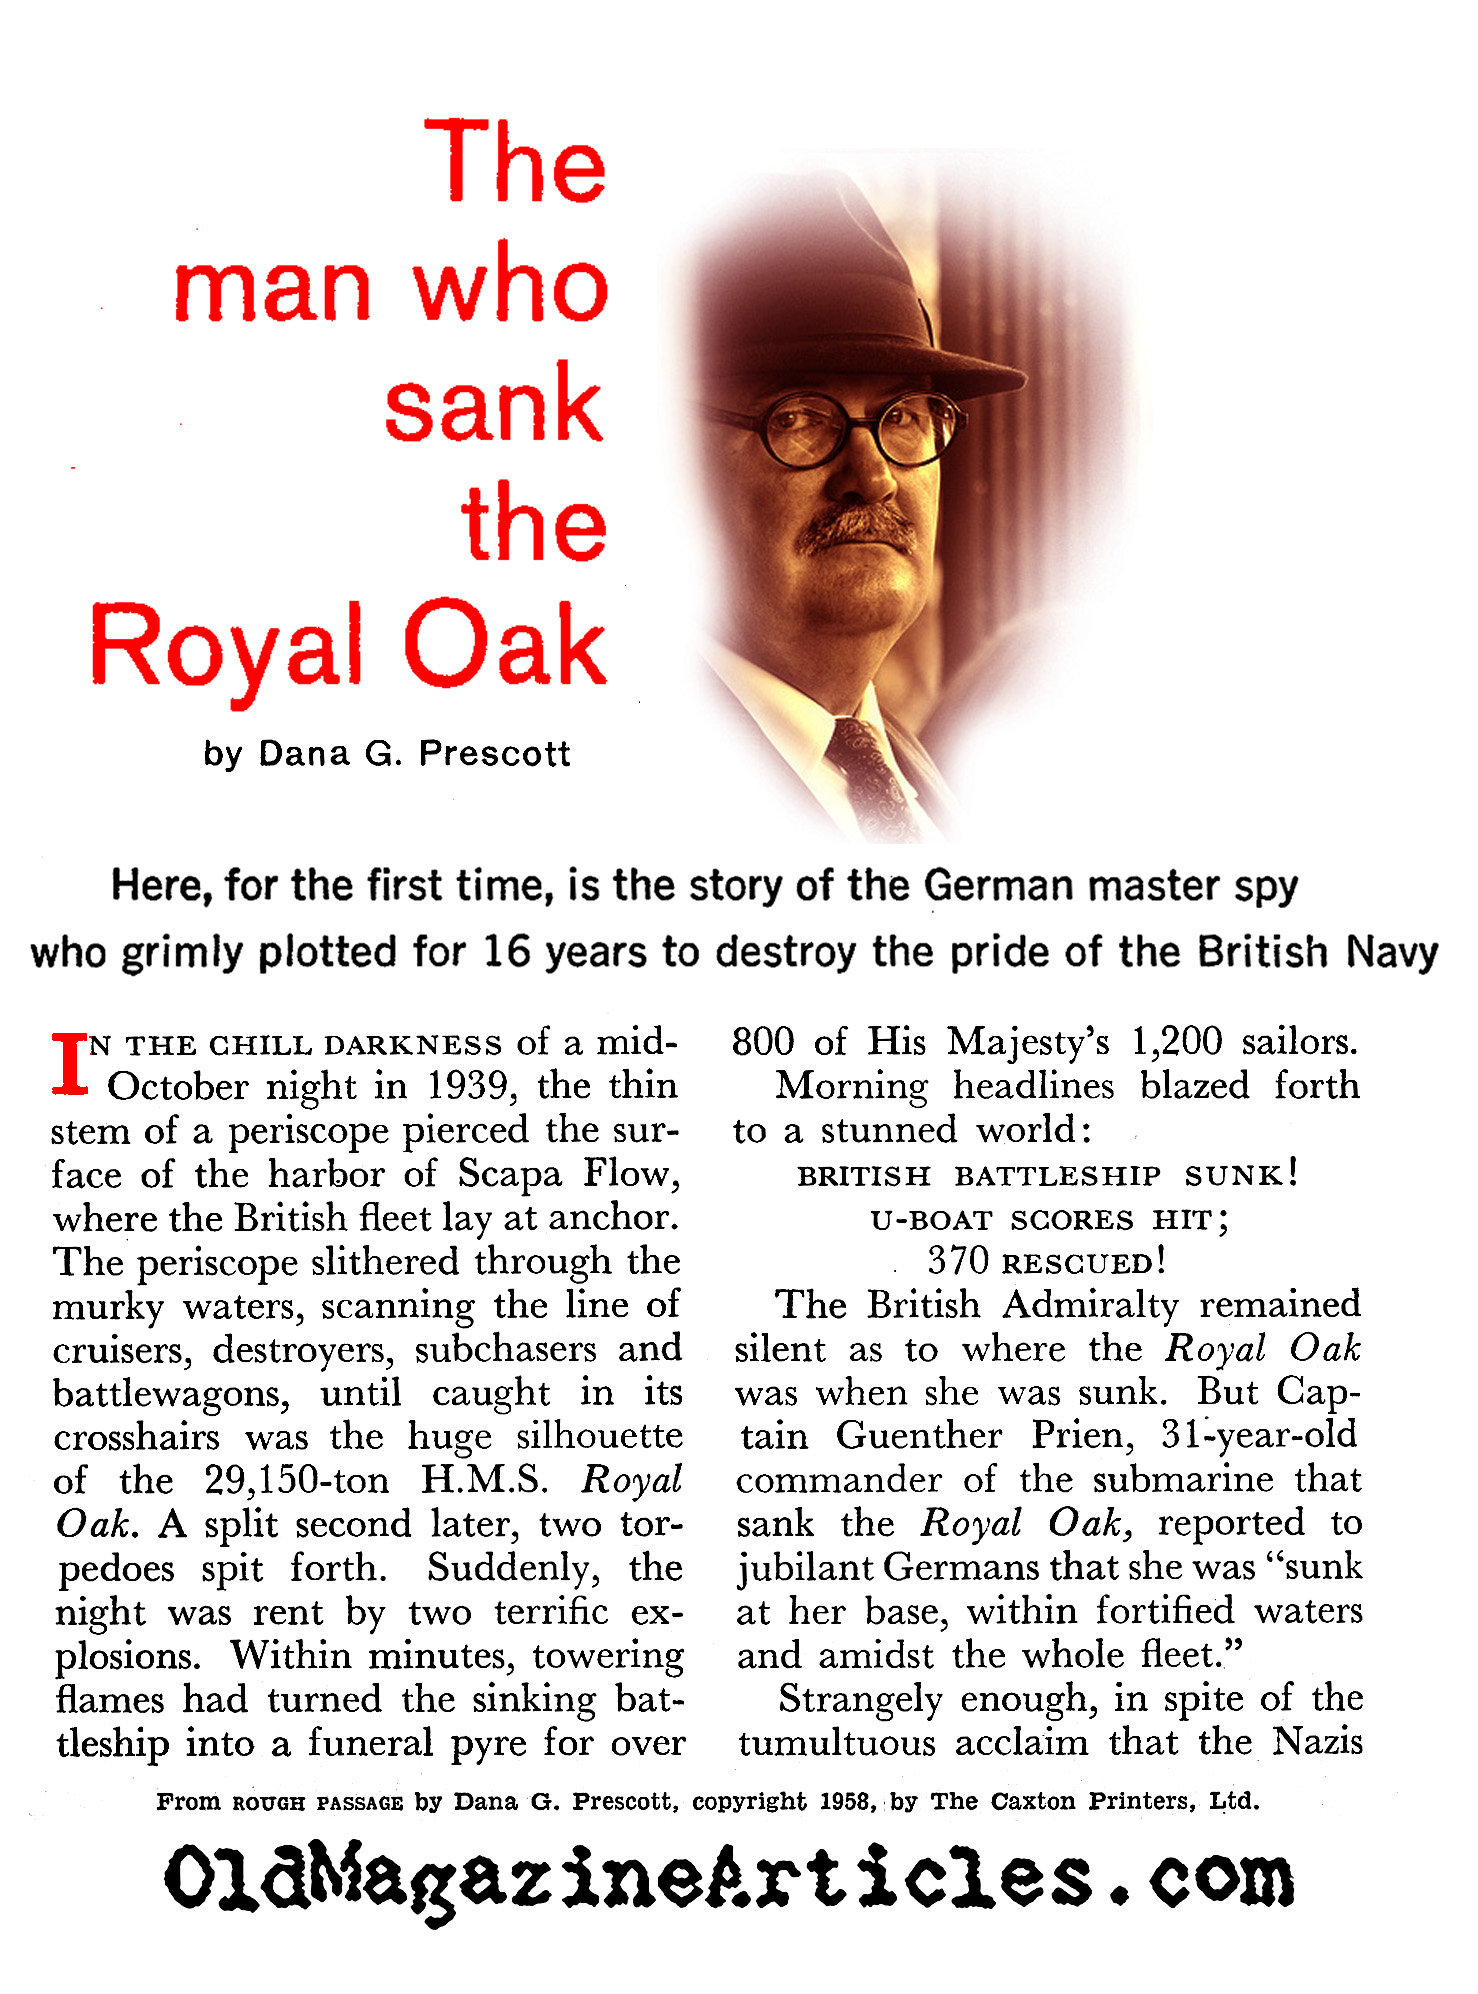 The Spy Who Sank the 'Royal Oak' (Coronet Magazine, 1959)